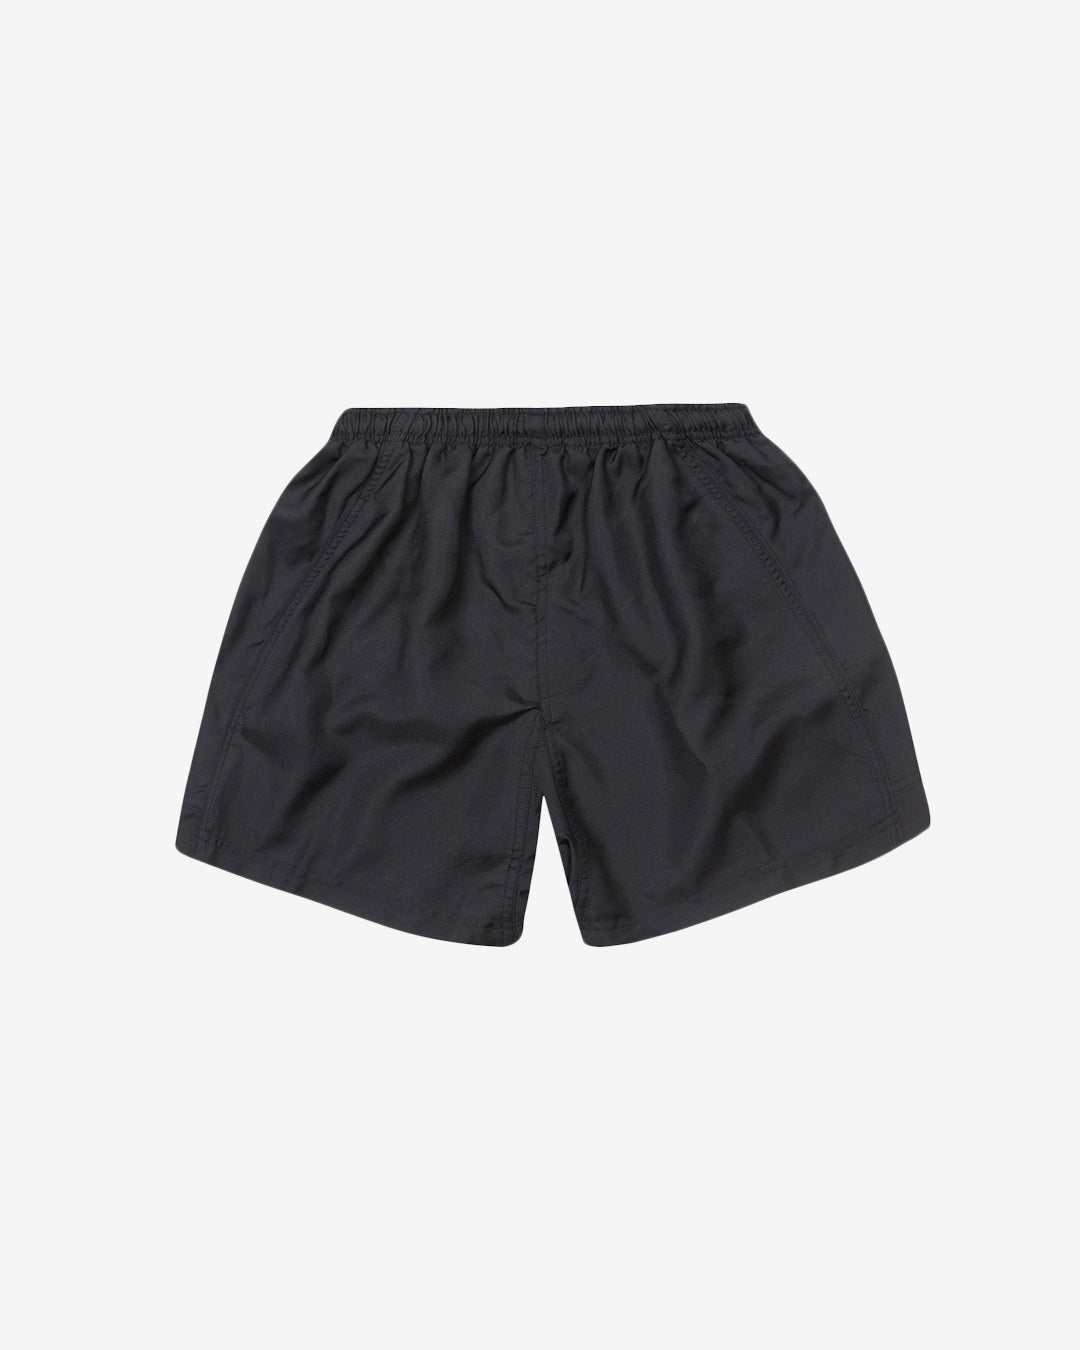 Hc: 9605 - Premier Shorts - Black